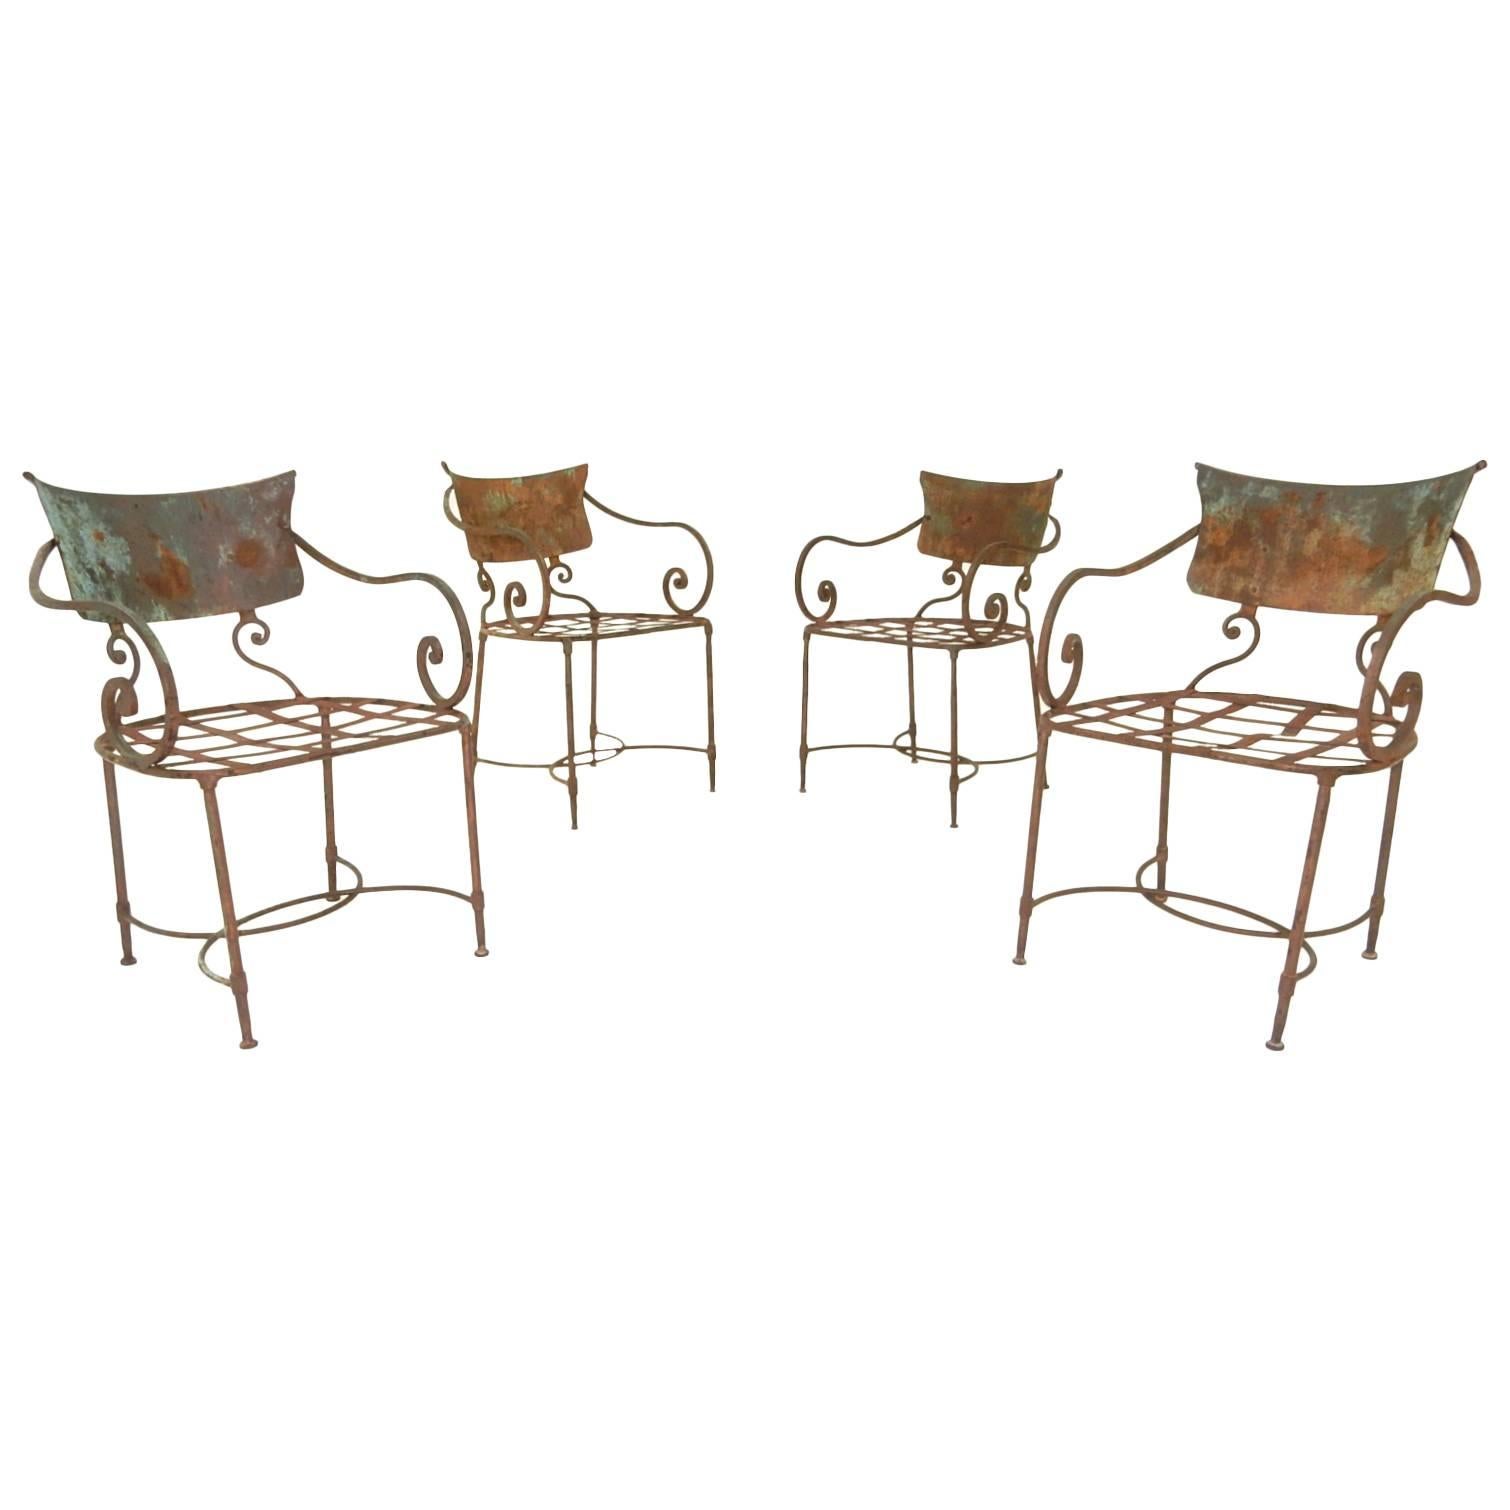 French Art Nouveau Sculptural Iron Garden Patio Chairs